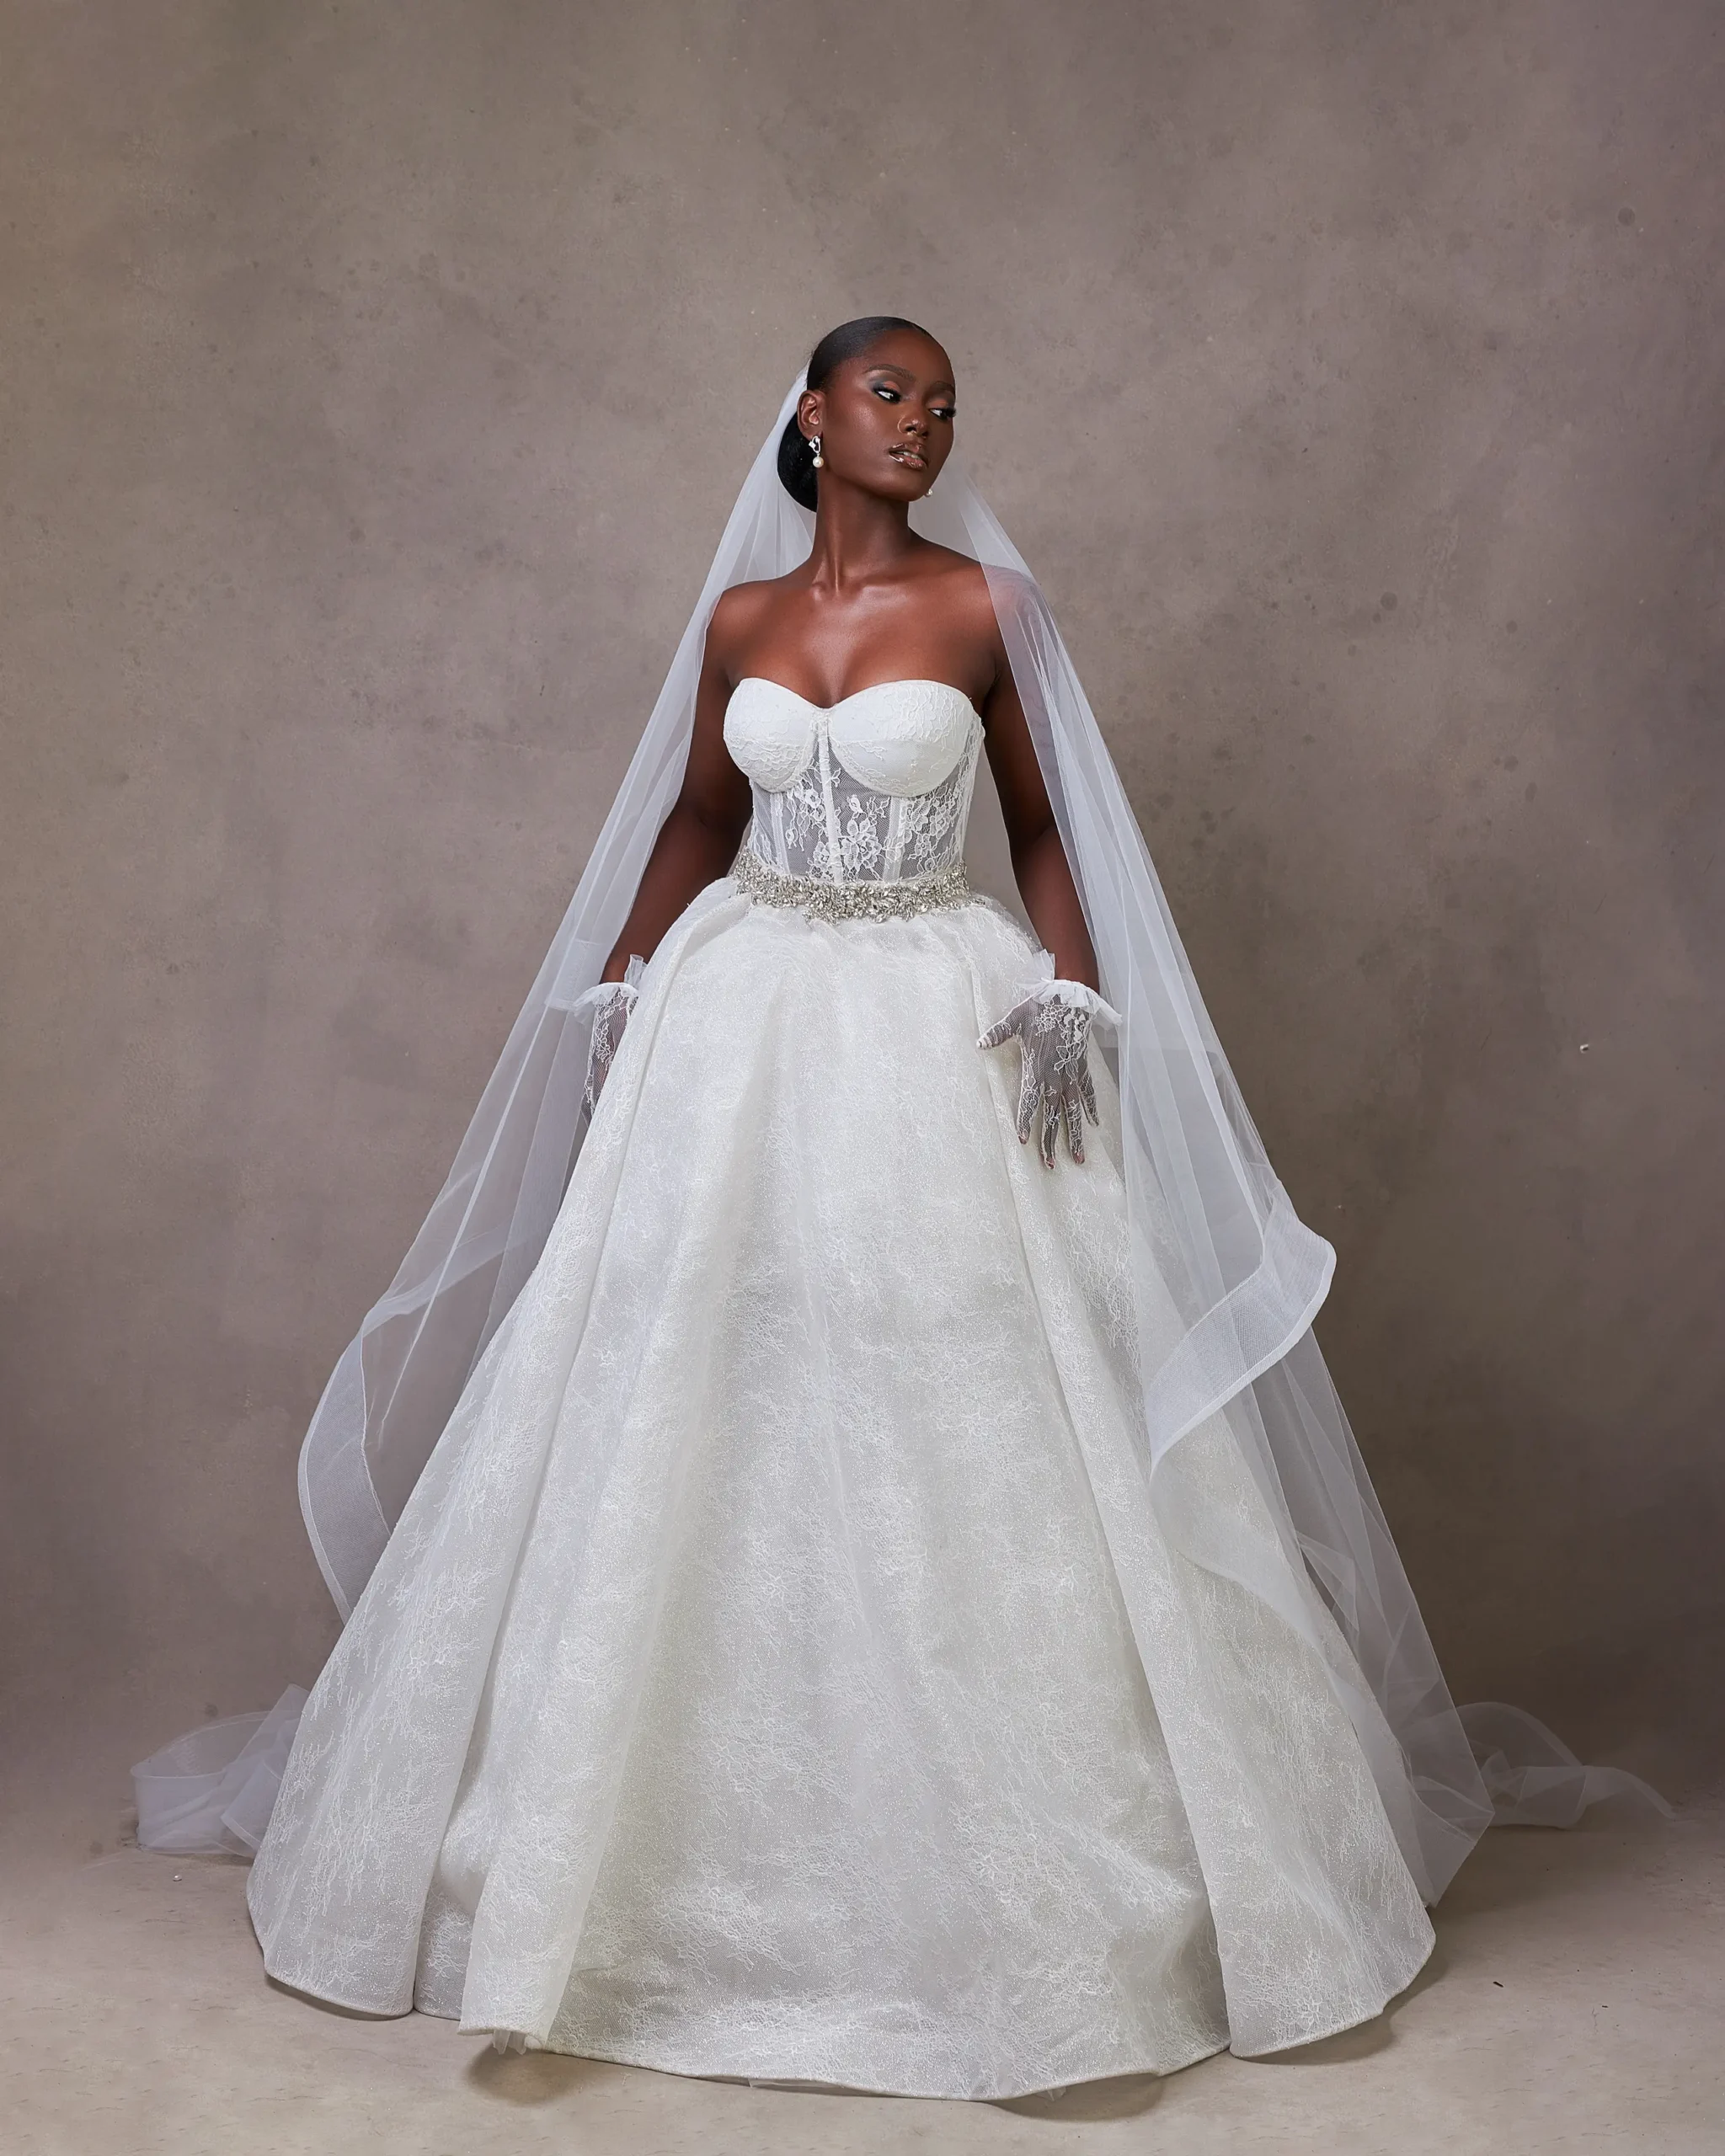 Aster Ball dress Yemi Shoyemi Bridal Bloom Collection